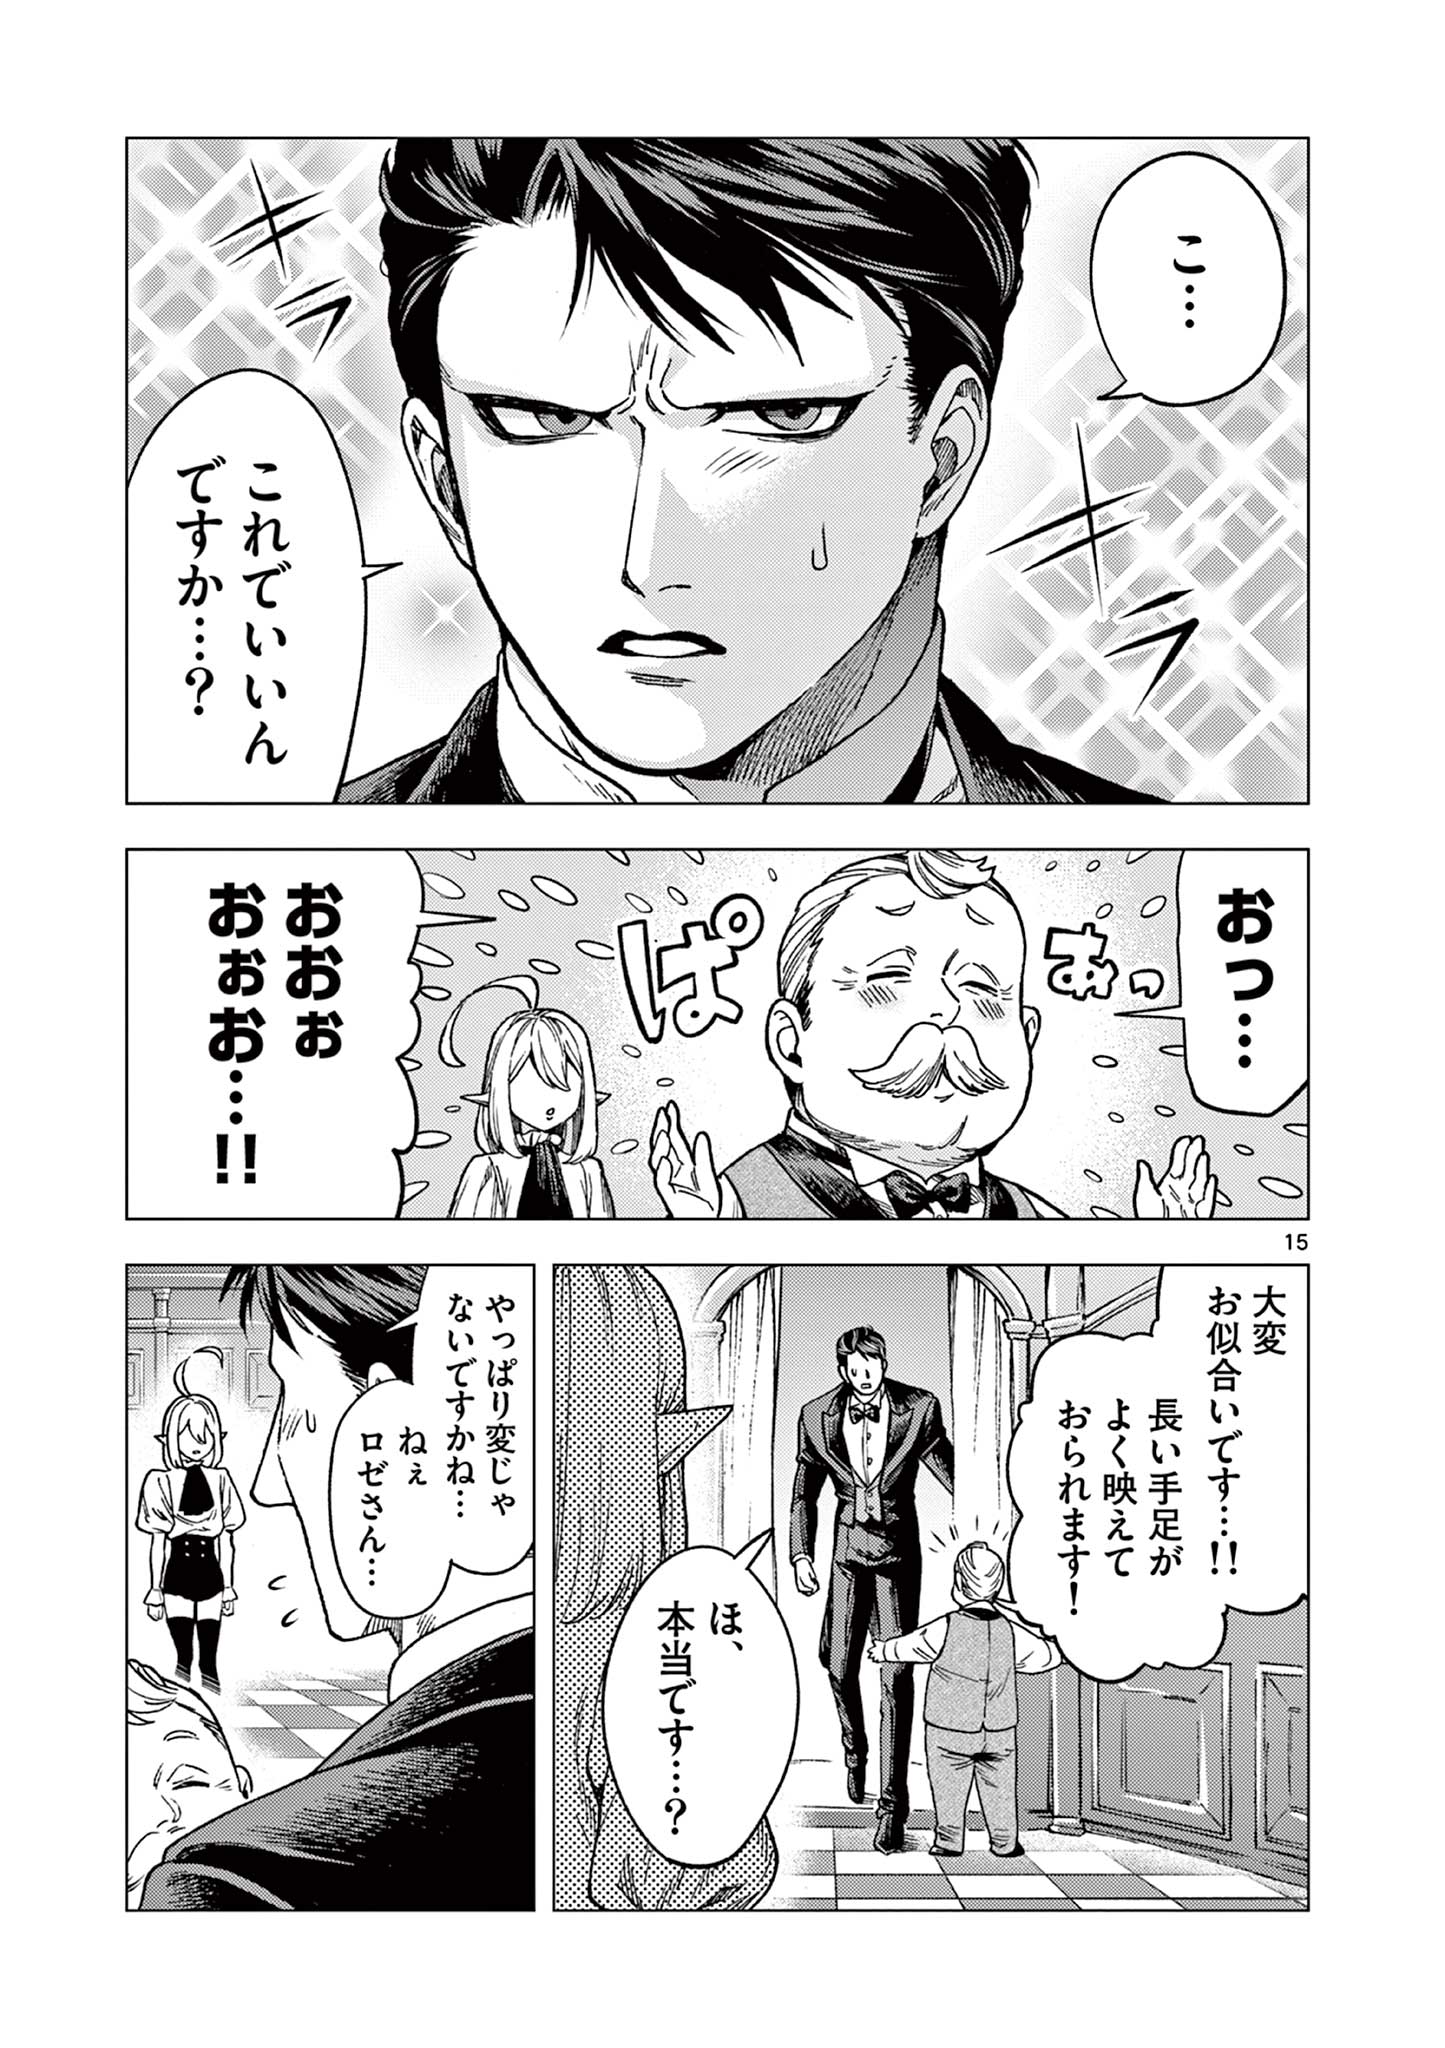 Raul to Kyuuketsuki - Chapter 3 - Page 15